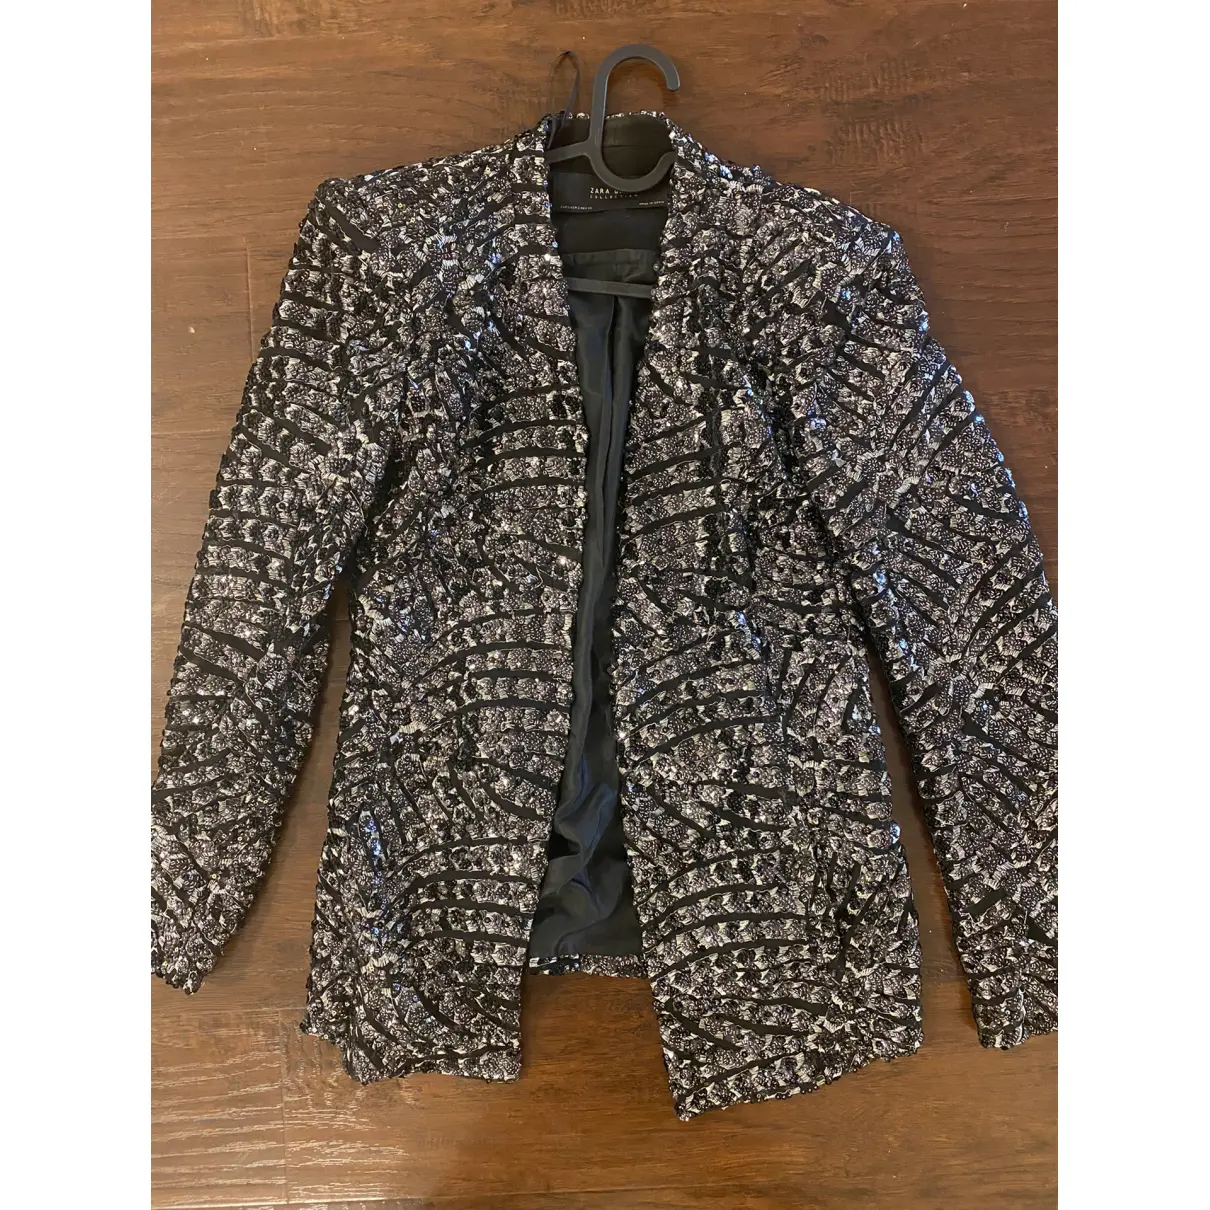 Buy Zara Glitter jacket online